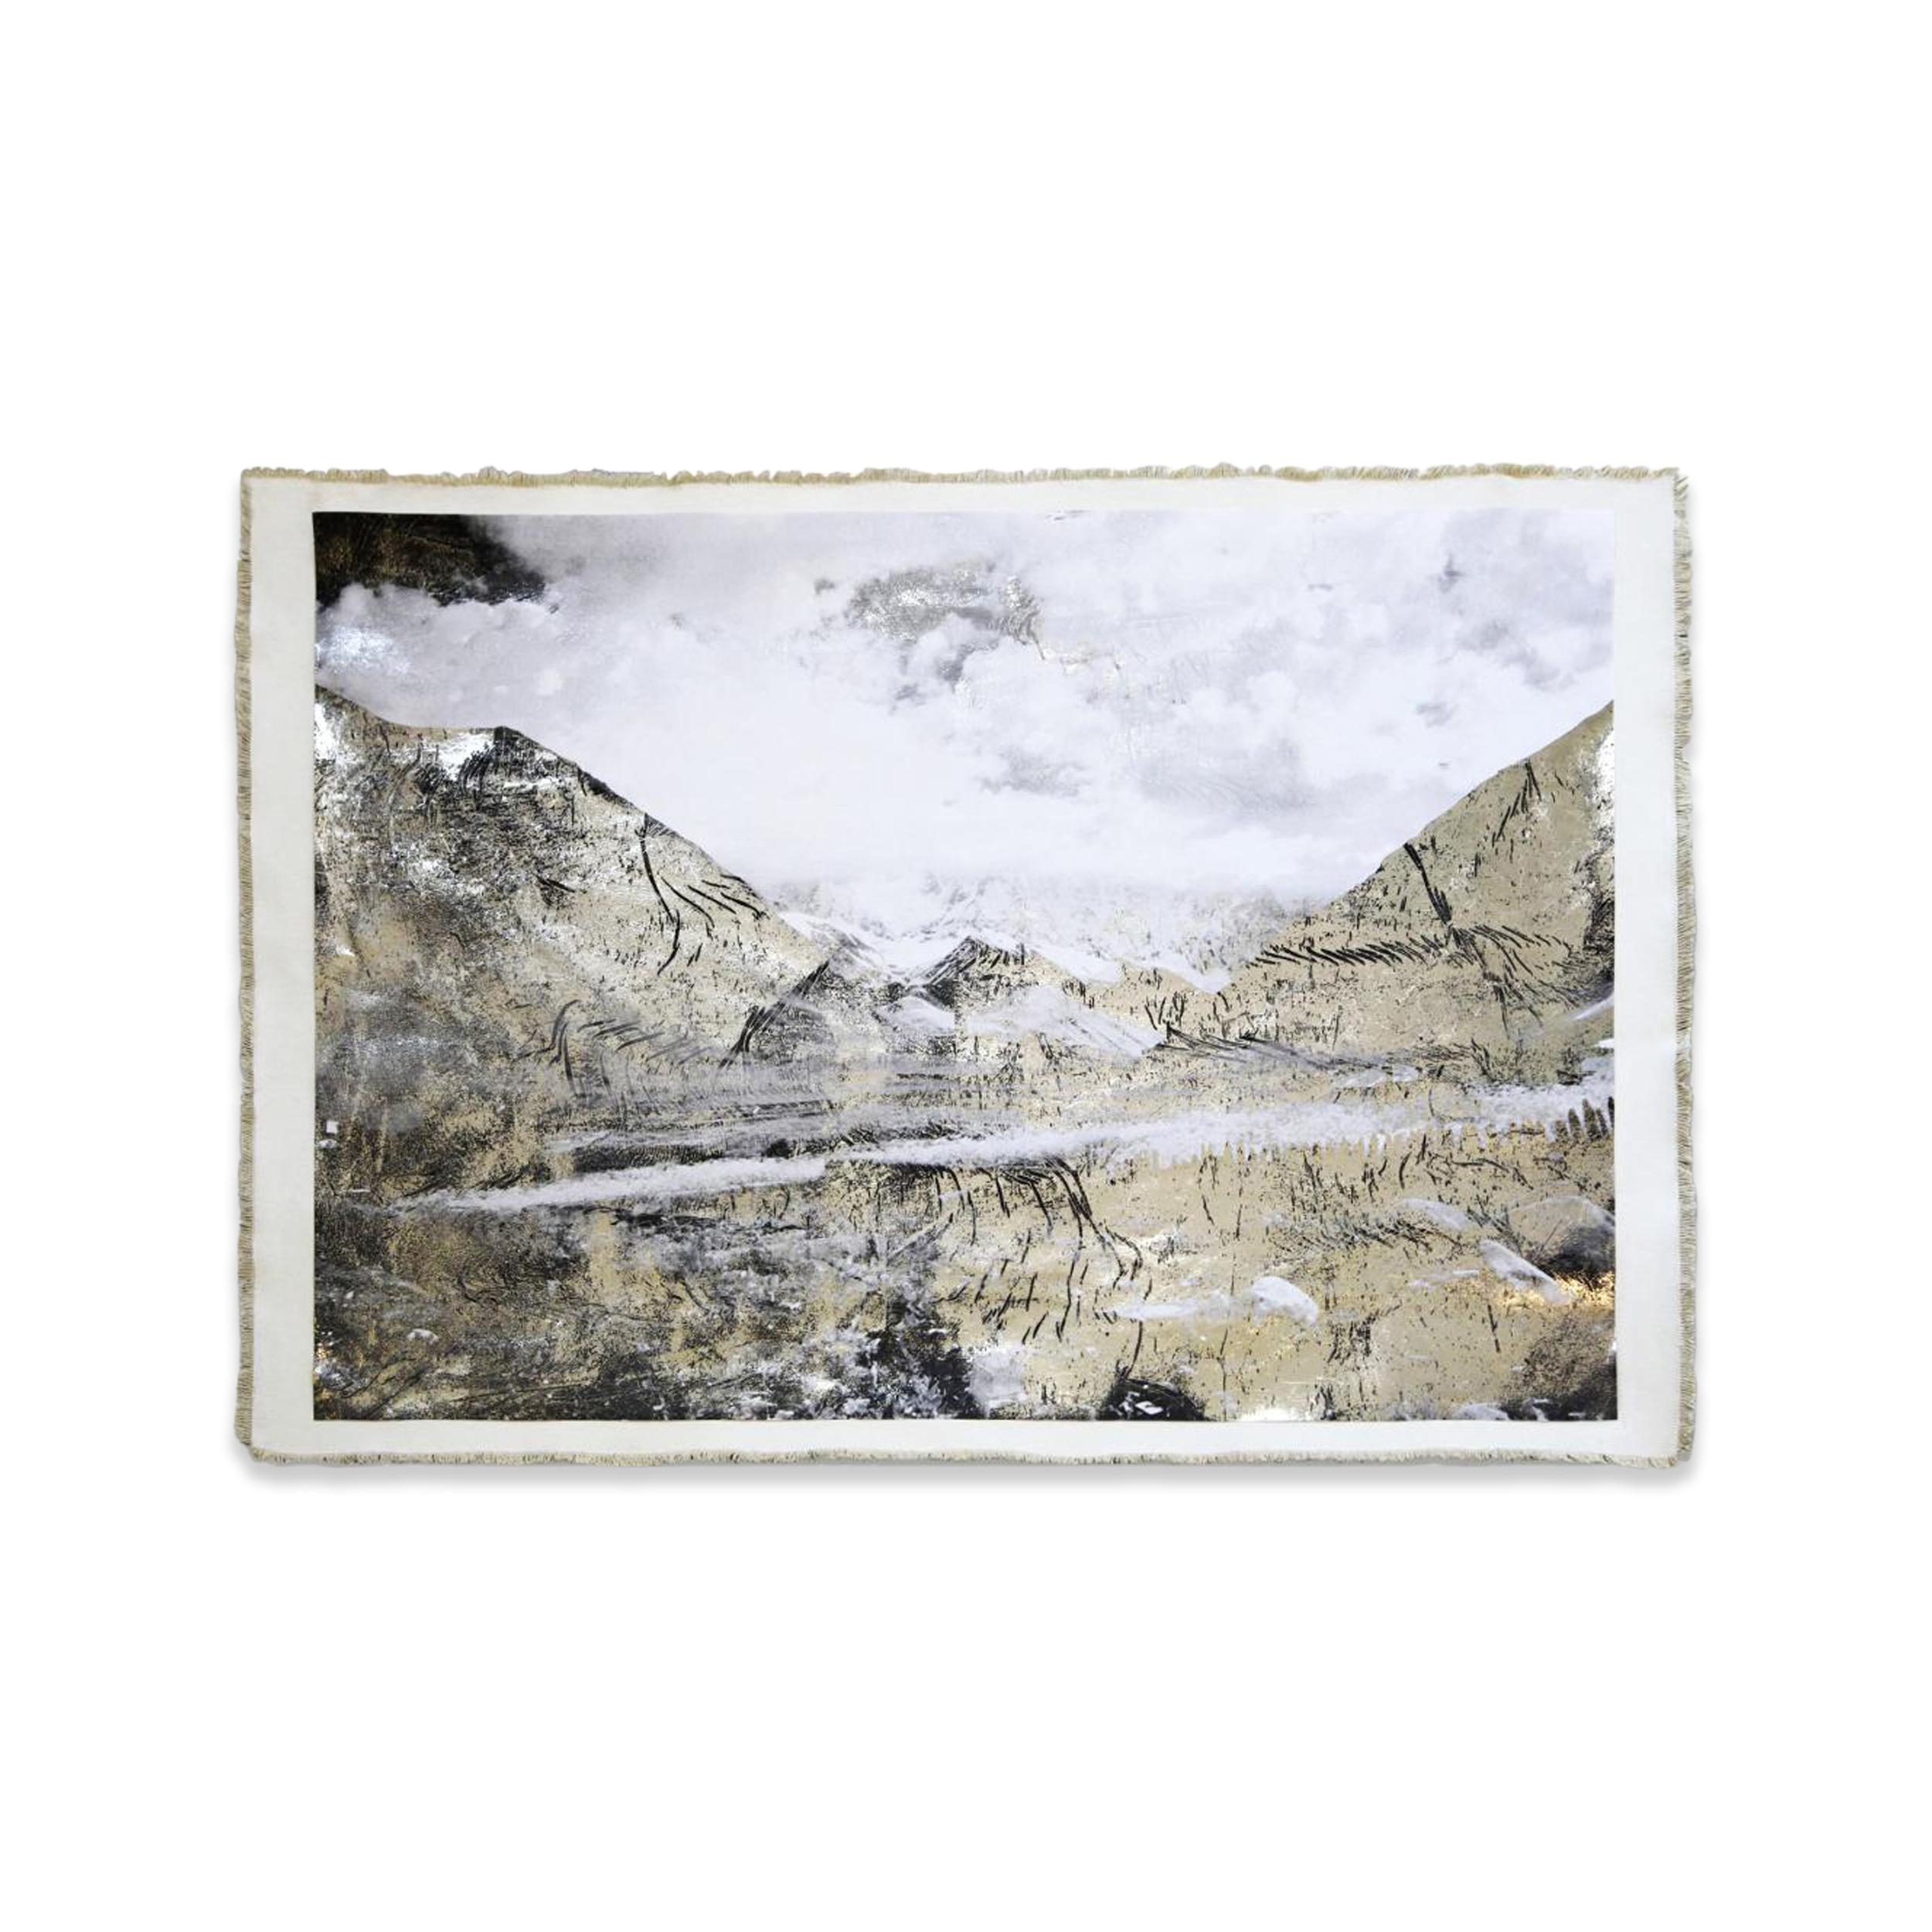 Bill Claps Landscape Painting - Ushguli With Shakra Mountain